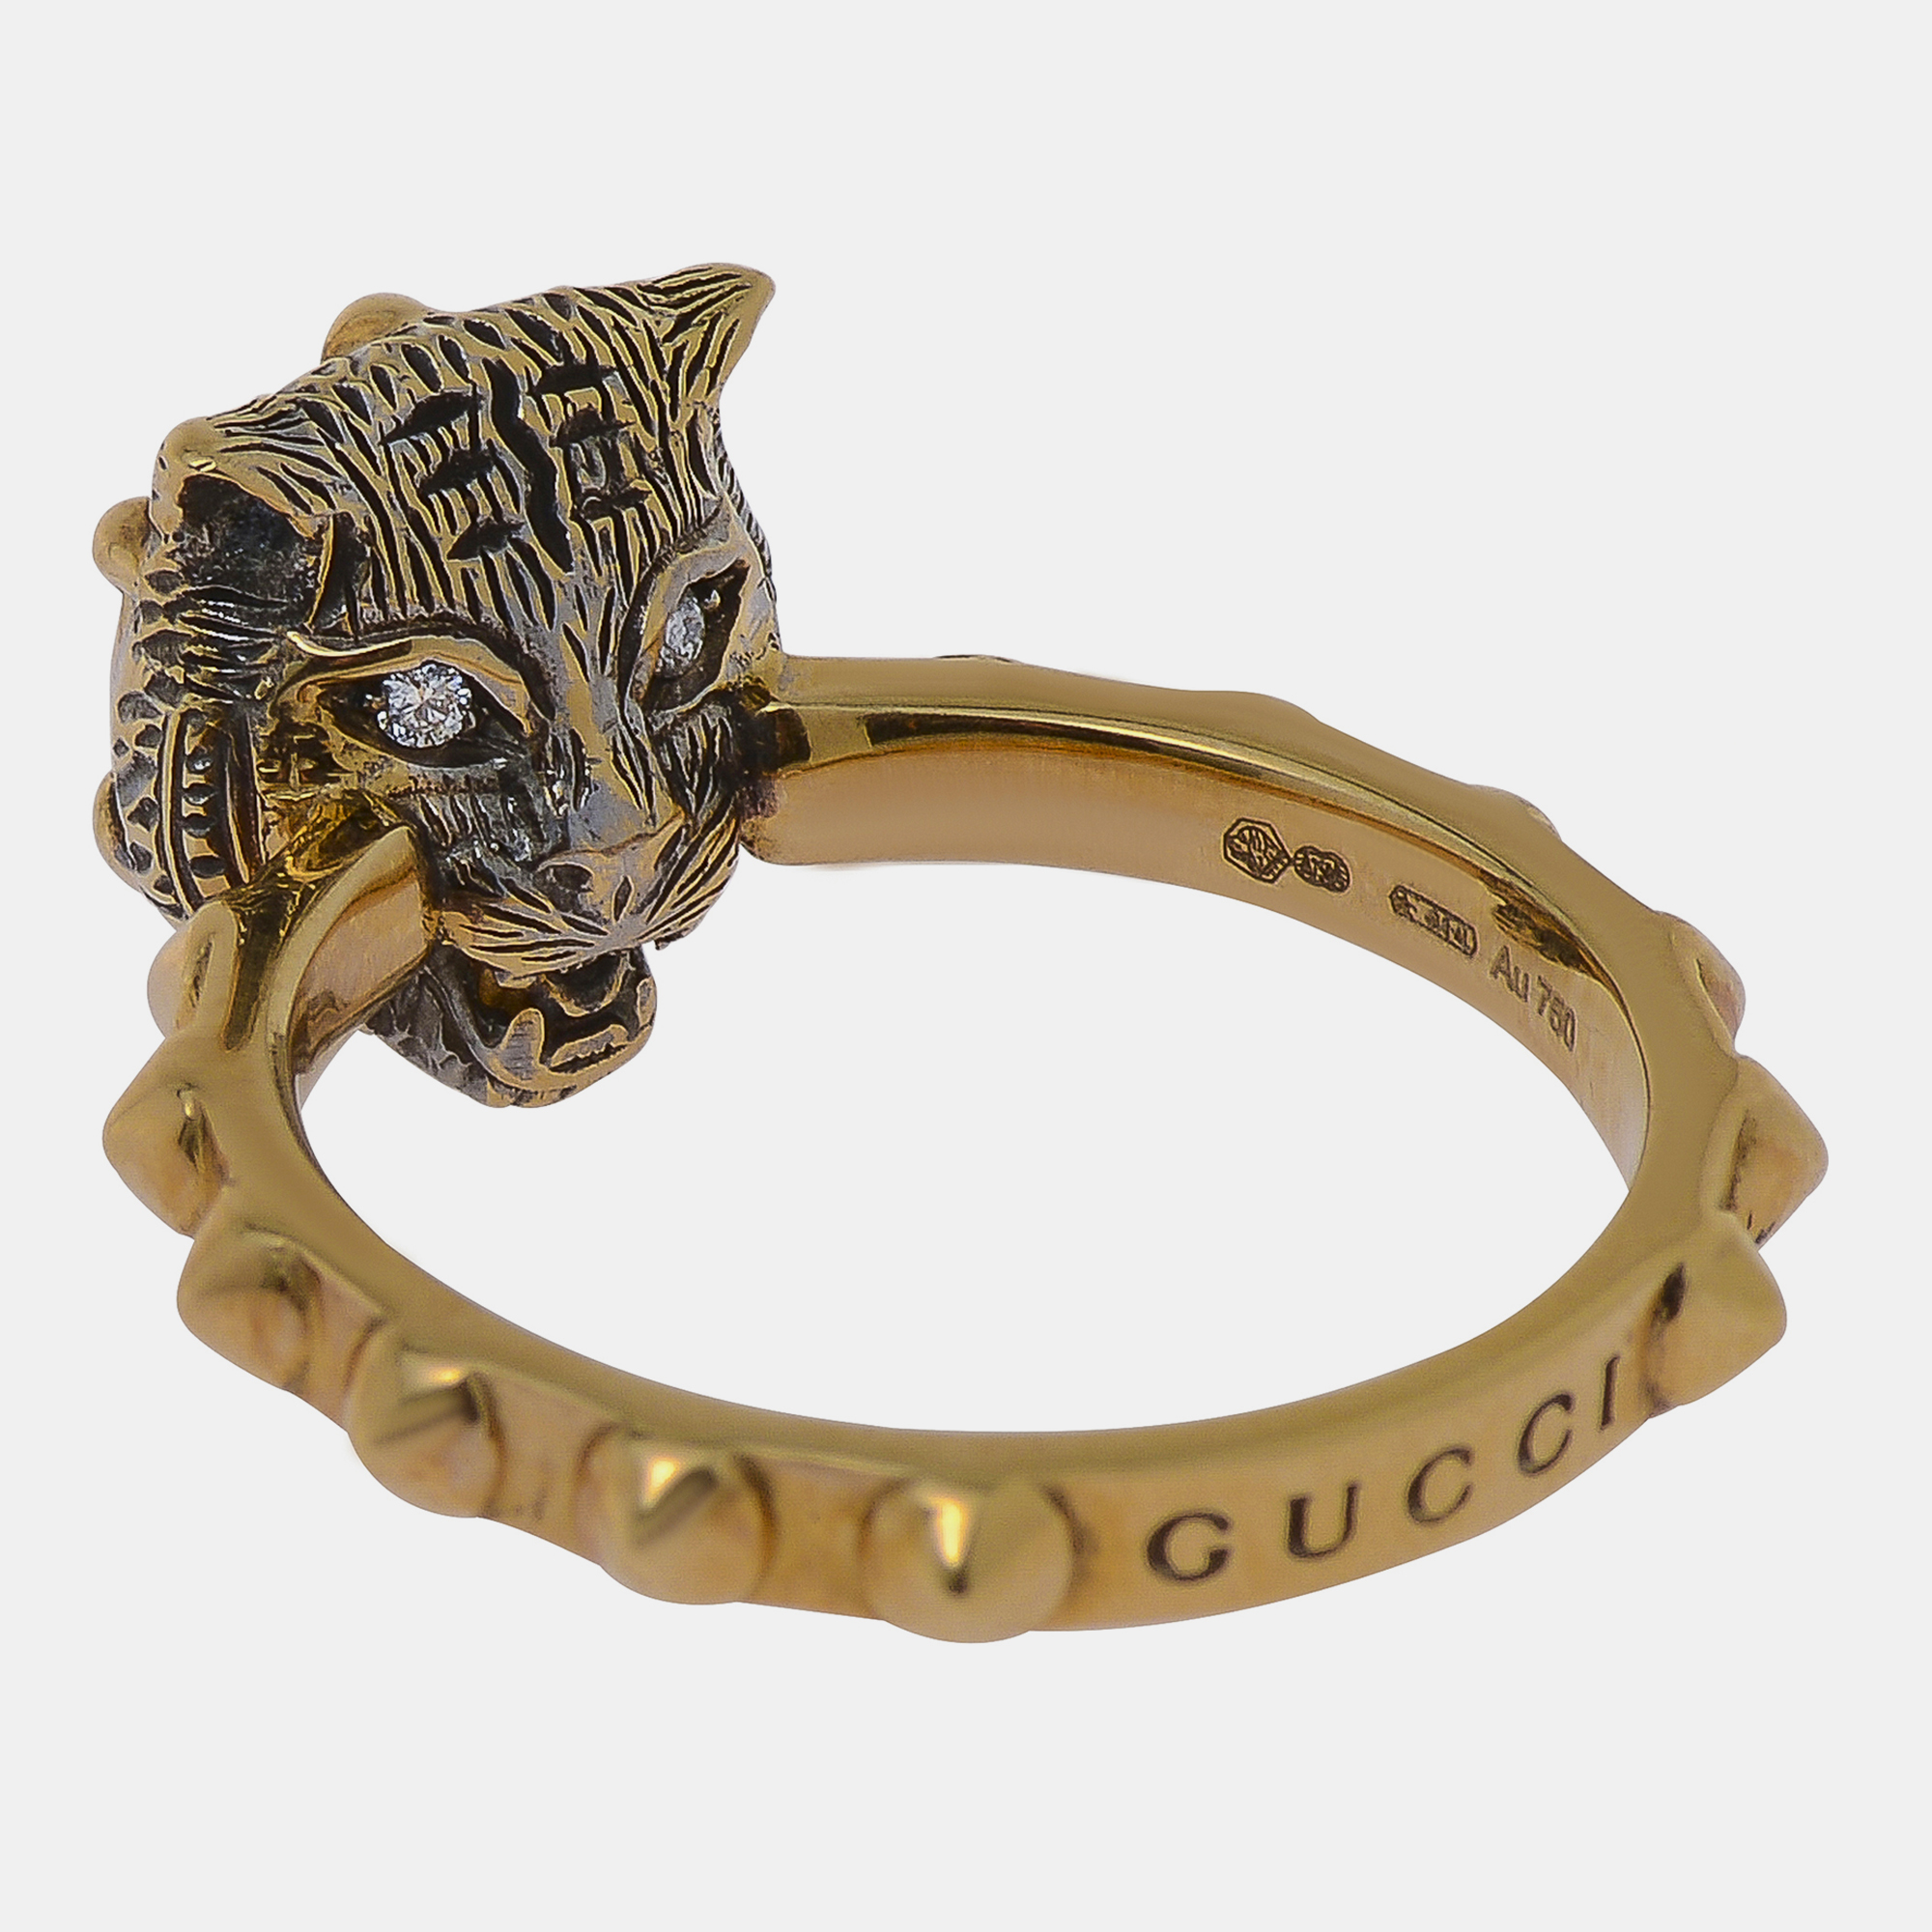 

Gucci Le Marches des Merveilles 18K Yellow Gold, Tourmaline and Diamond Statement Ring Sz. 7.5